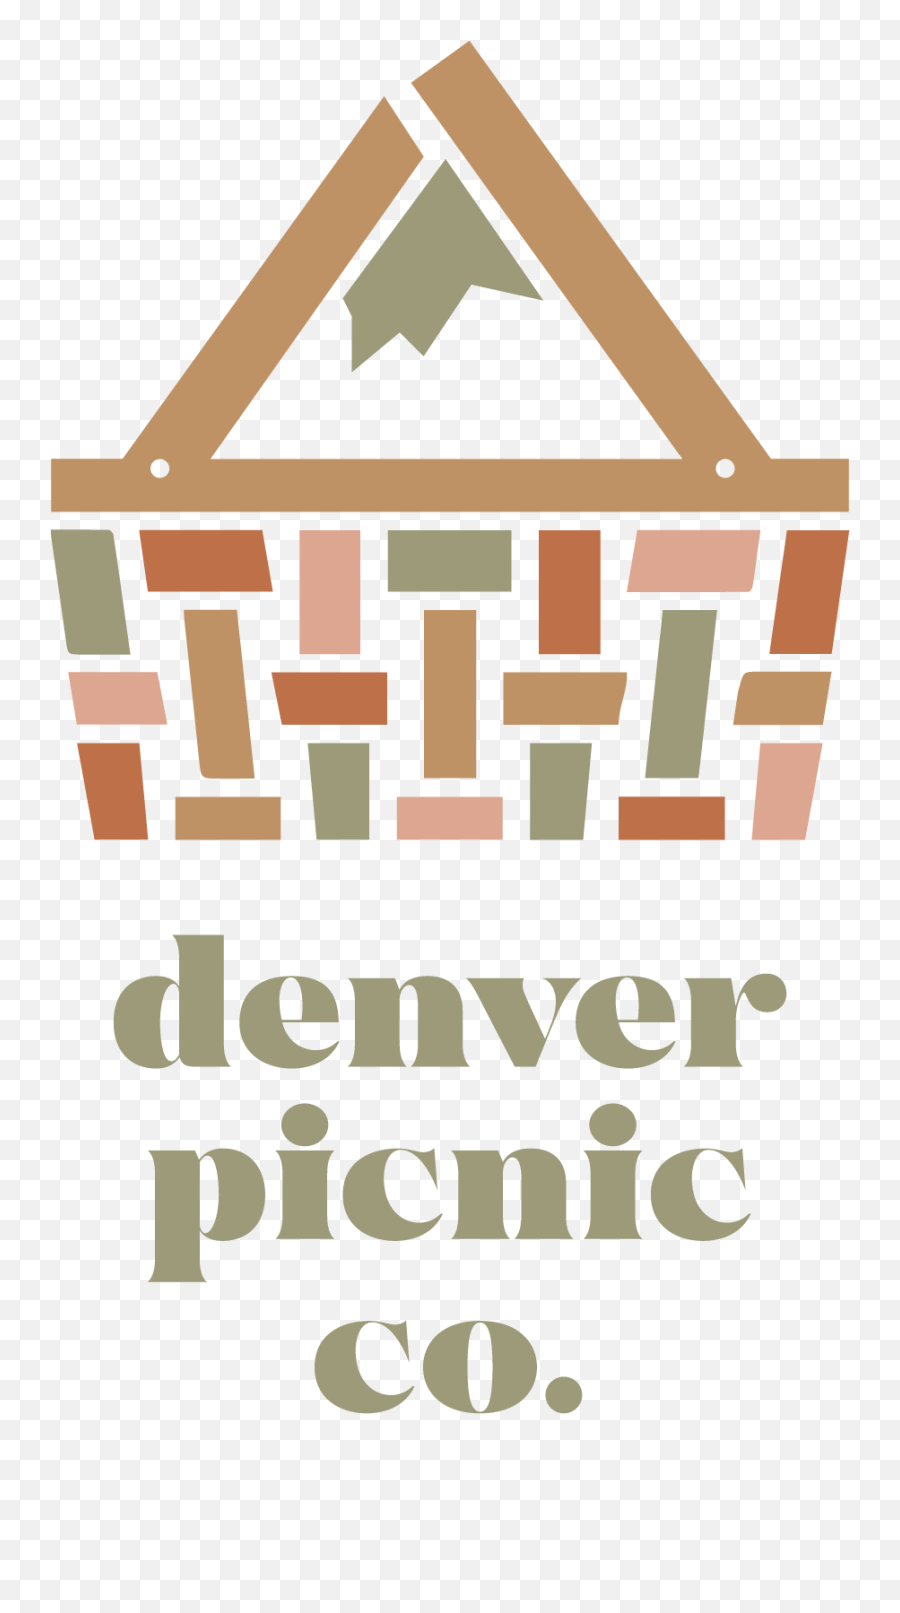 Cornhole Boards U2014 Denver Picnic Co Emoji,Cornhole Logo